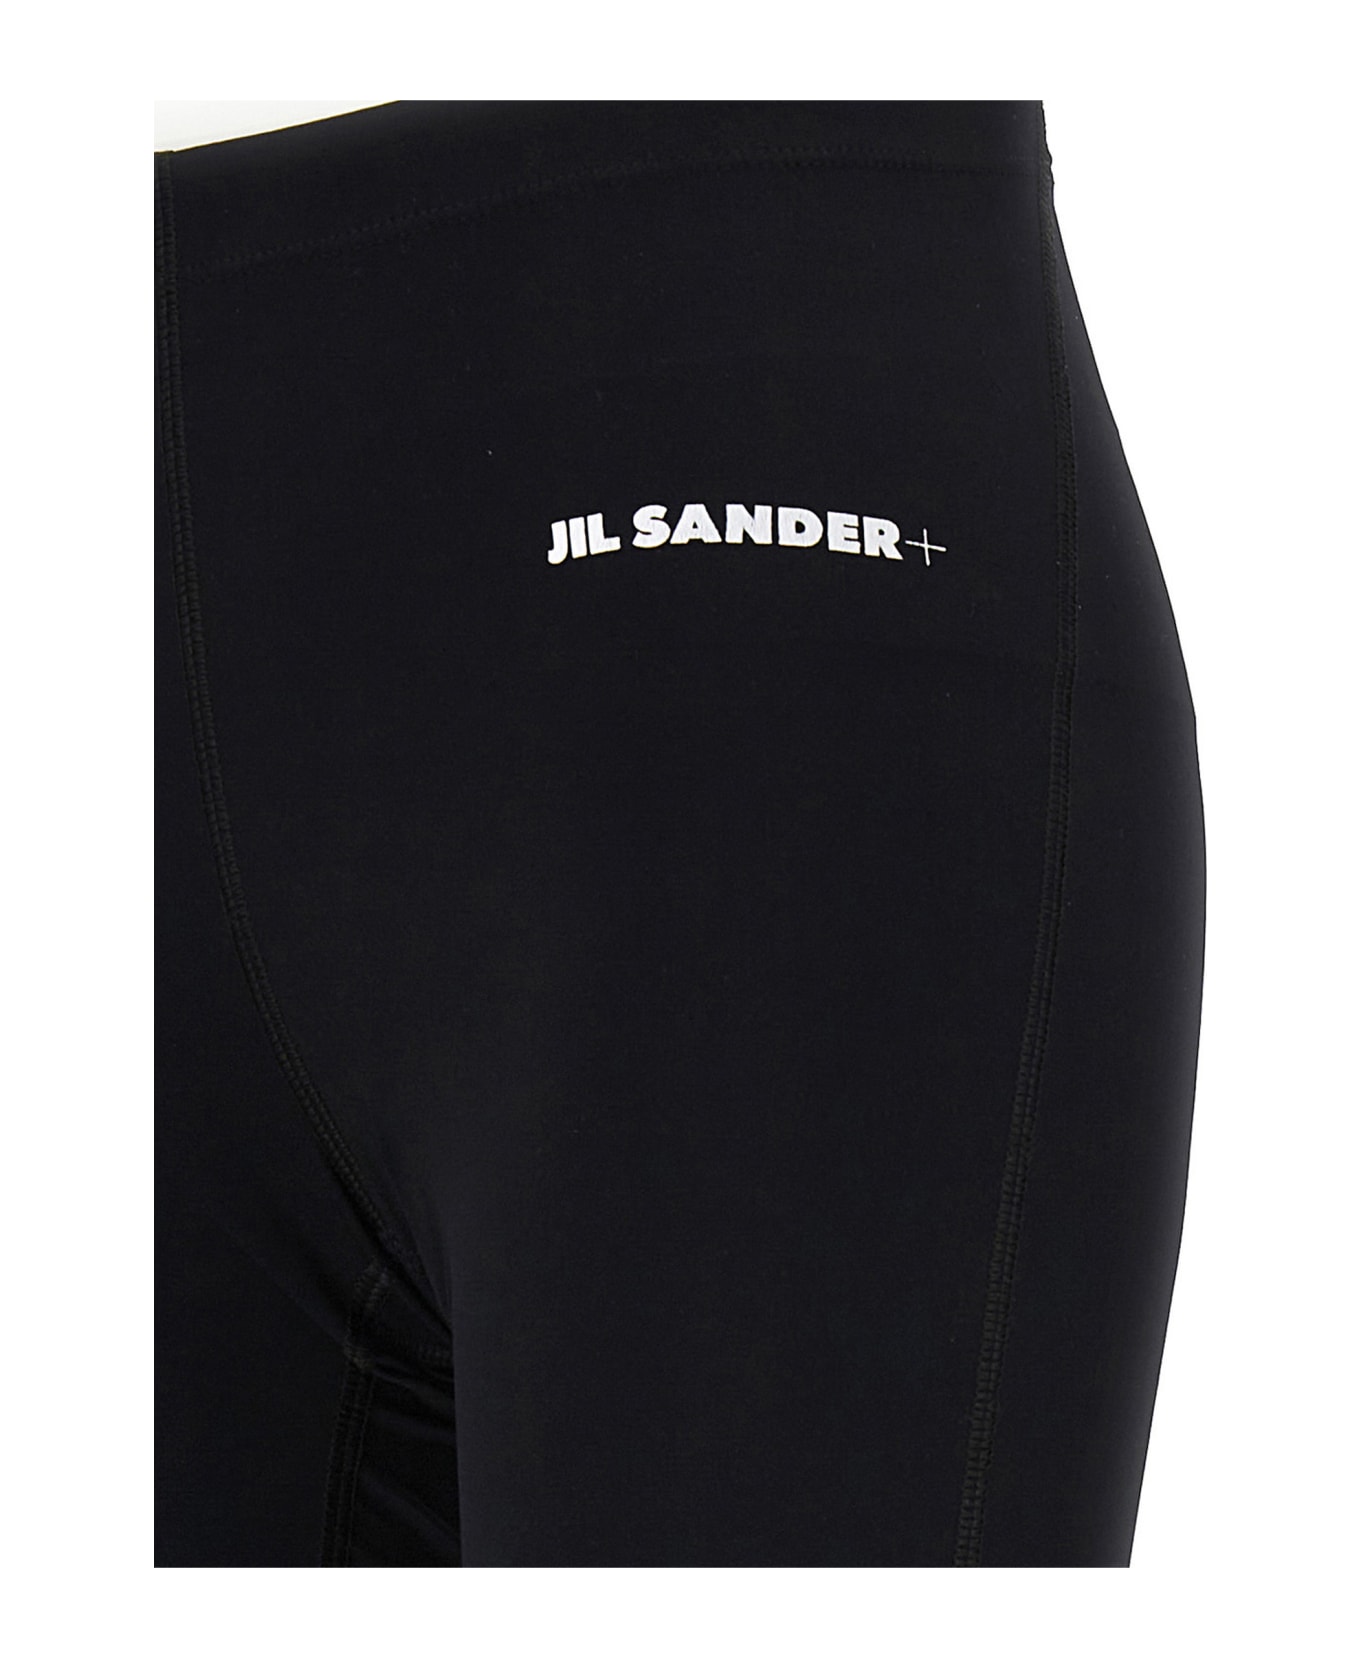 Jil Sander Logo Print Leggings - Black  